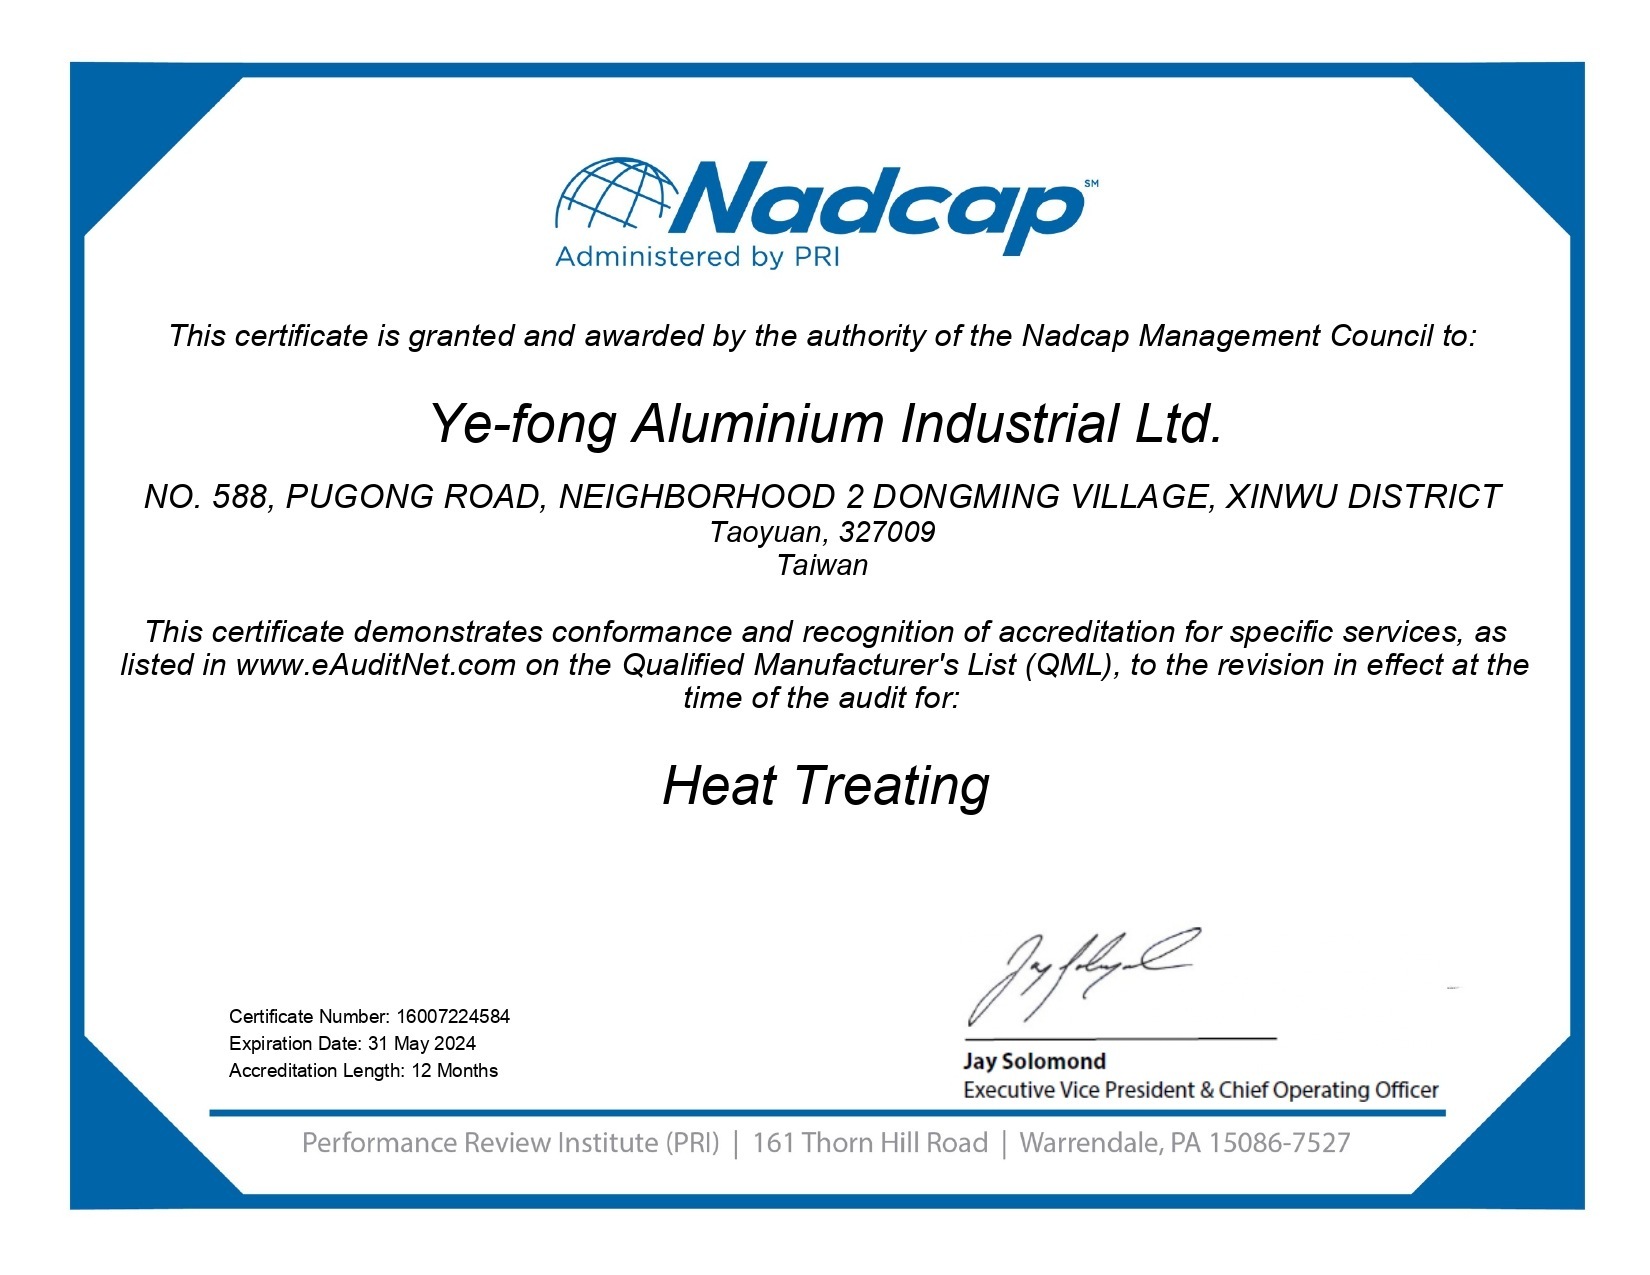 https://ye-fong.com/wp-content/uploads/2024/03/NADCAP-Heat-Treating-Certificate-Nadcap-Aerospace-audit-224584-20240221_pages-to-jpg-0001.jpg